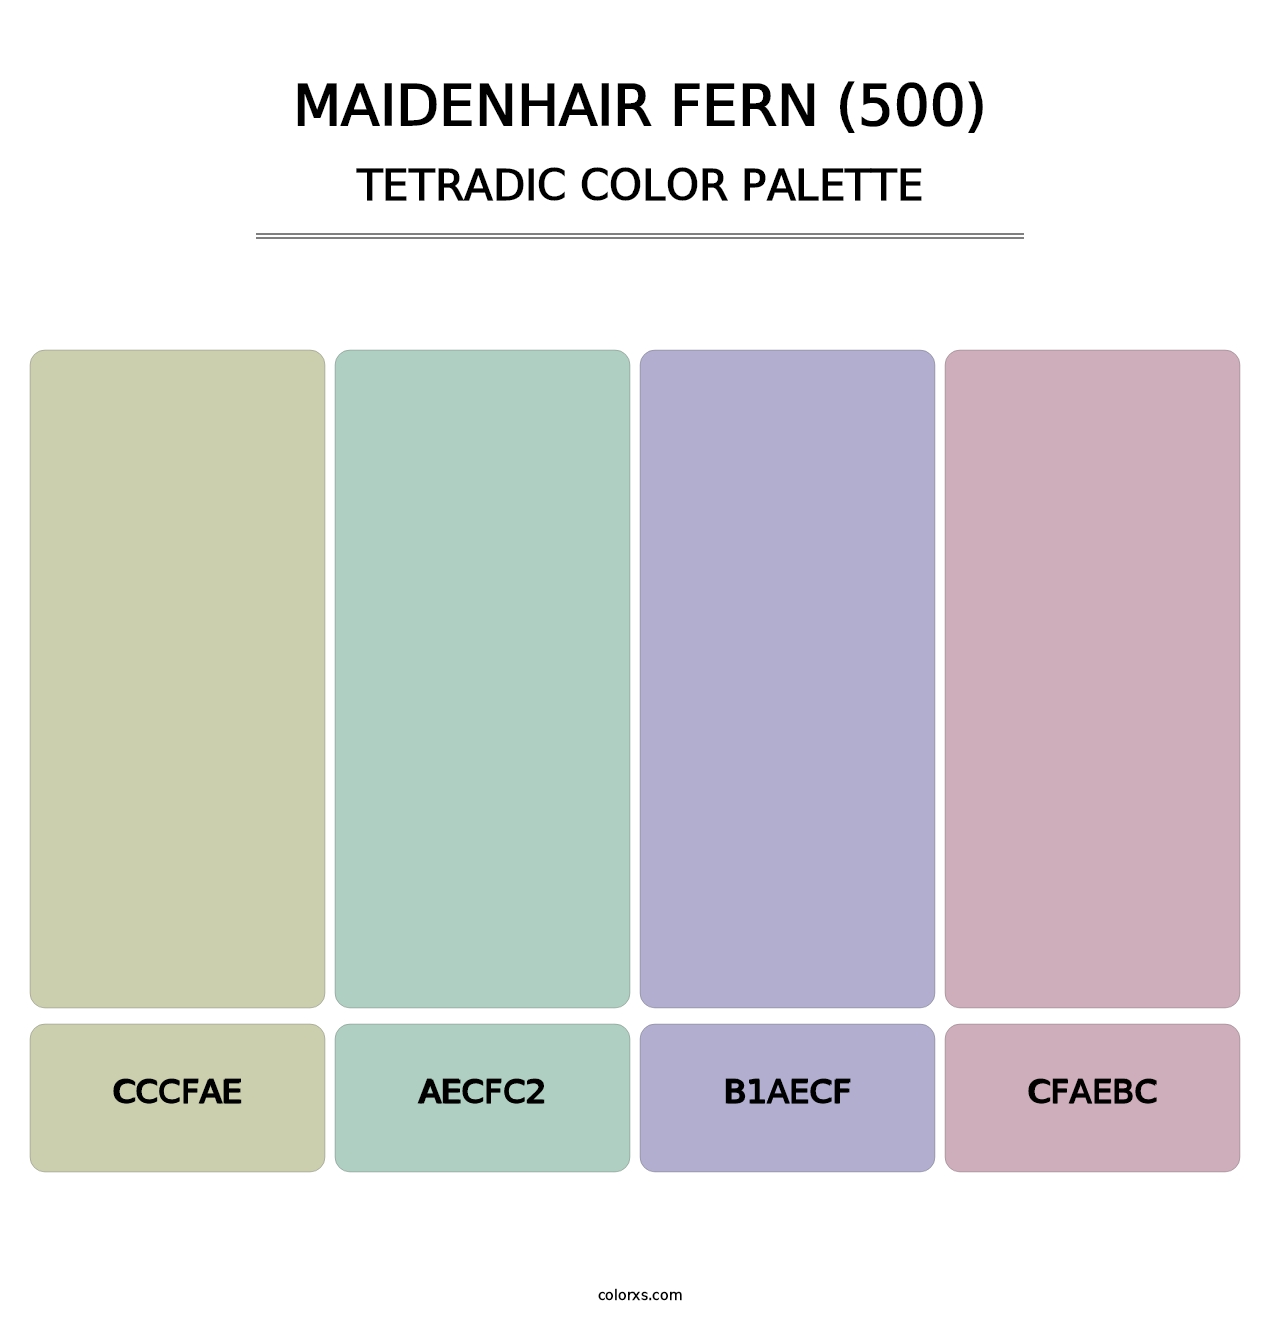 Maidenhair Fern (500) - Tetradic Color Palette